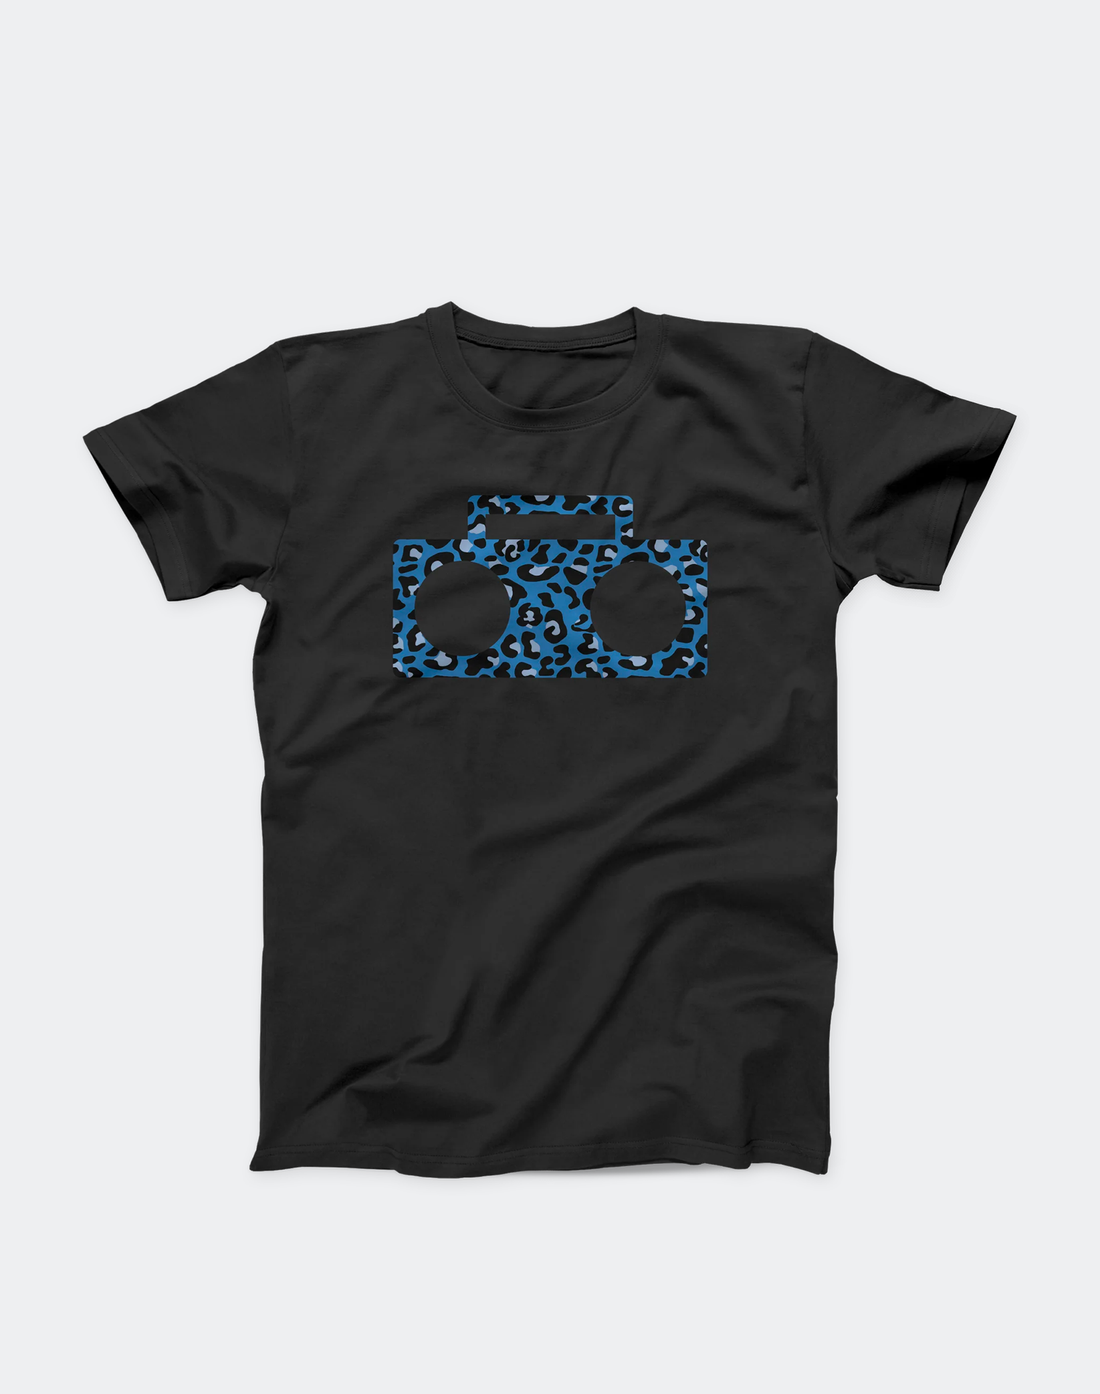 Cheetah Boombox T-Shirt (Adult)